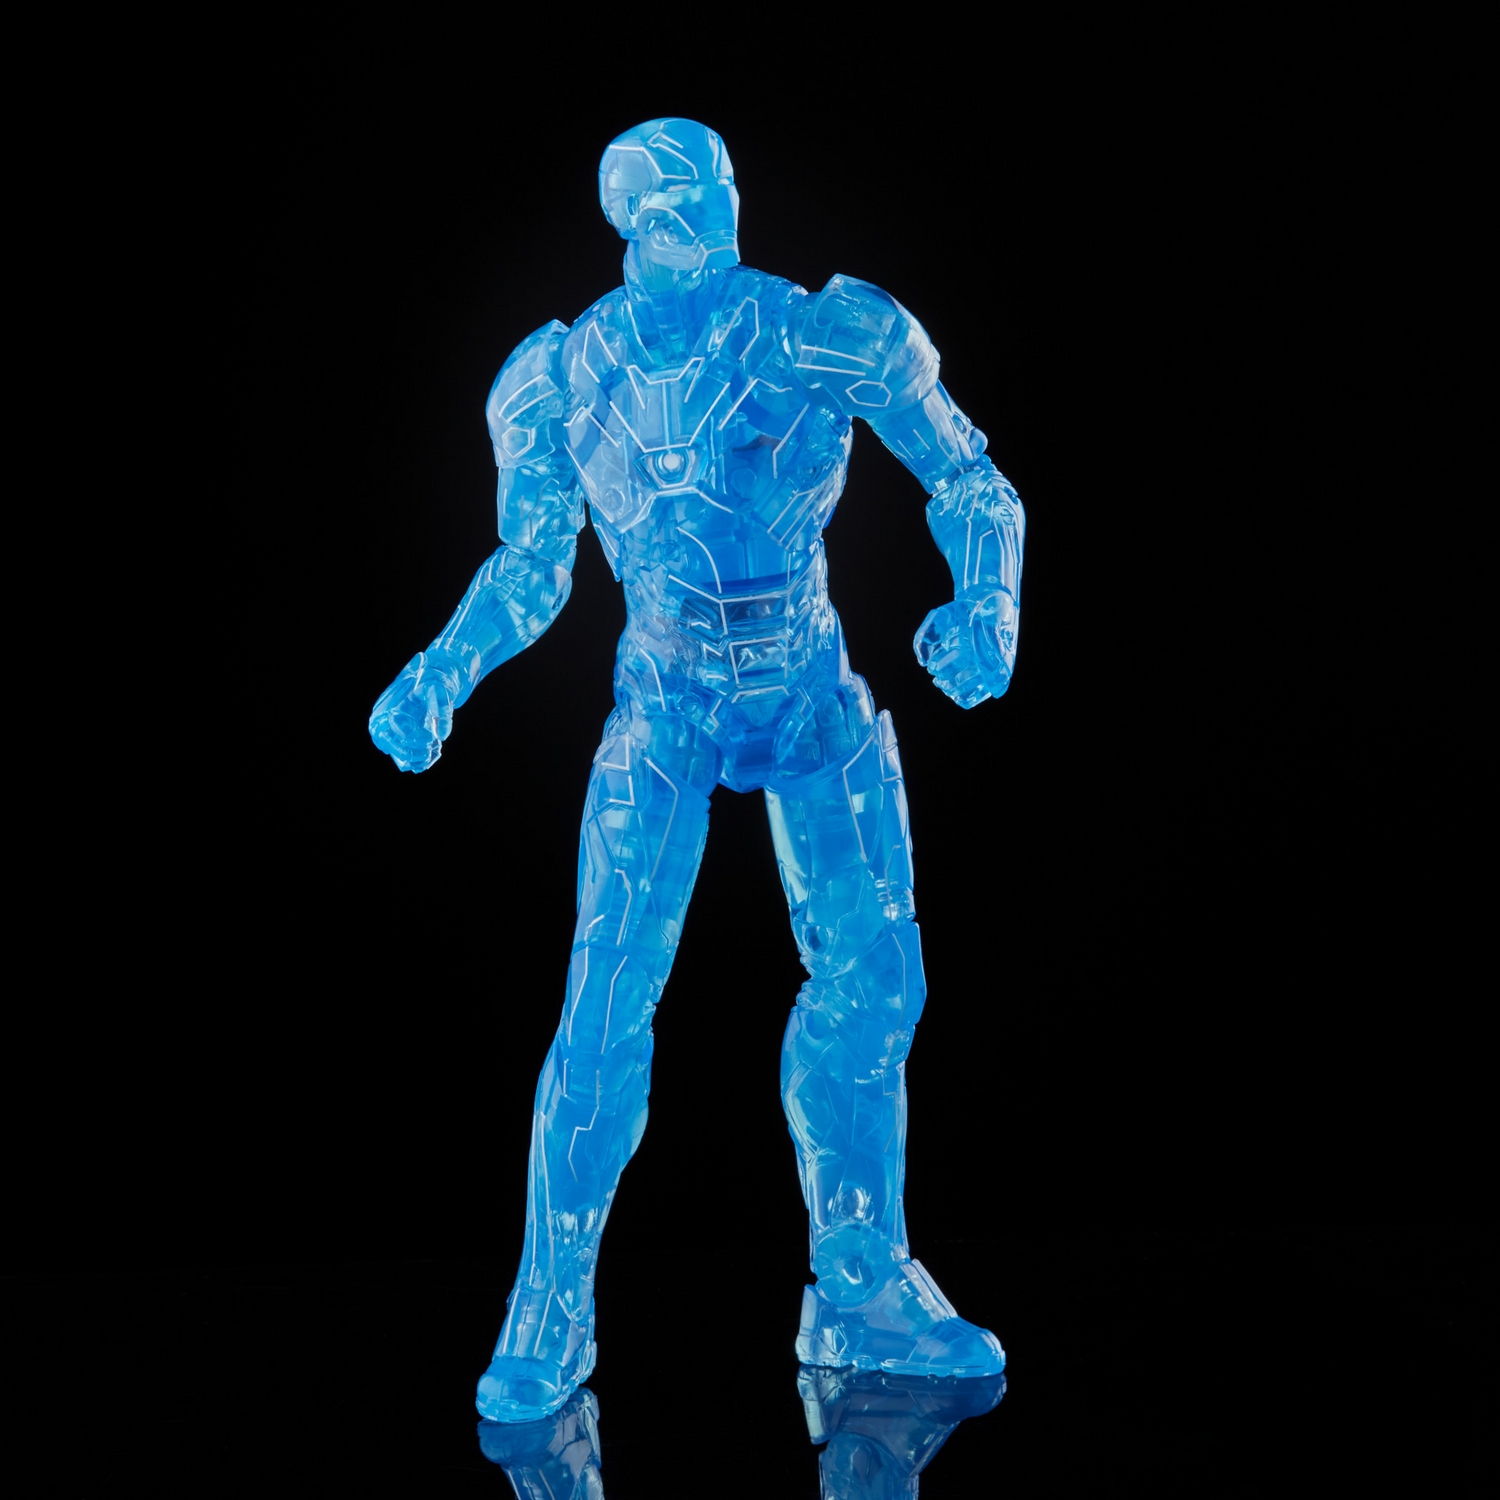 MARVEL LEGENDS SERIES 6-INCH IRON MAN Figure Assortment - Hologram Iron Man - oop (7).jpg